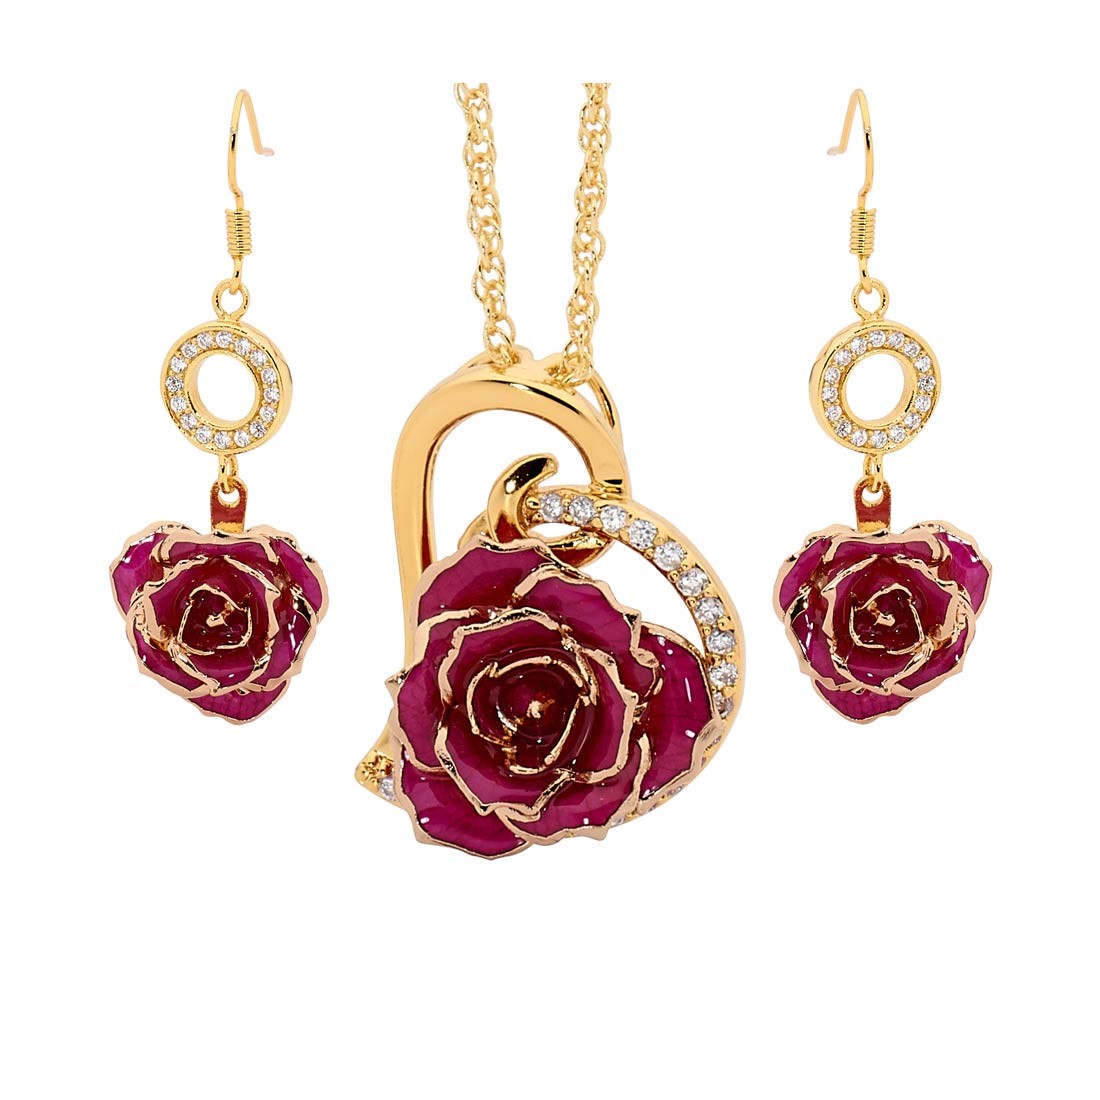 Purple Matched Set in 24K Gold Heart Theme. Glazed Rose Pendant & Earrings